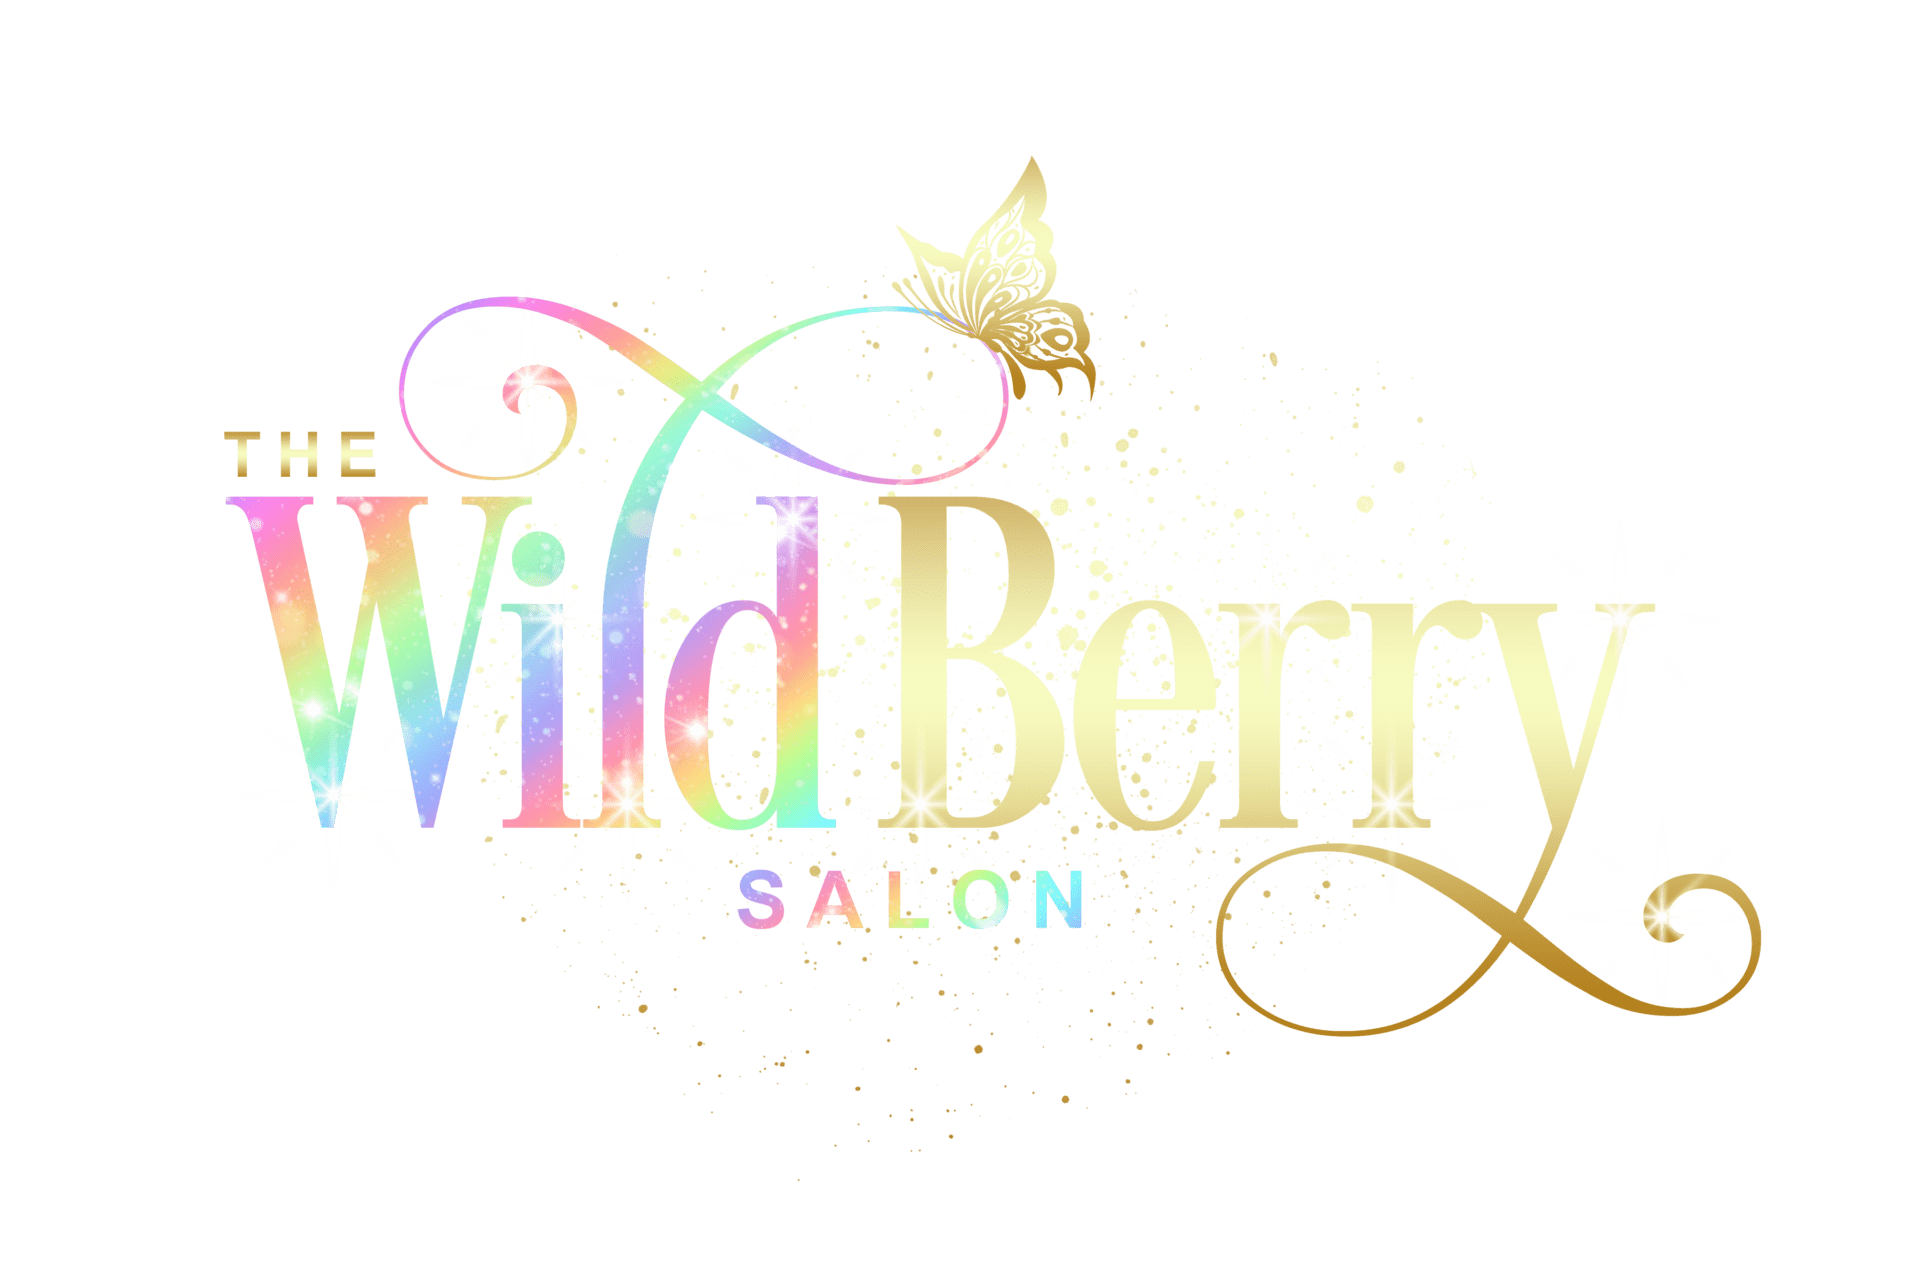 The Wild Berry Salon